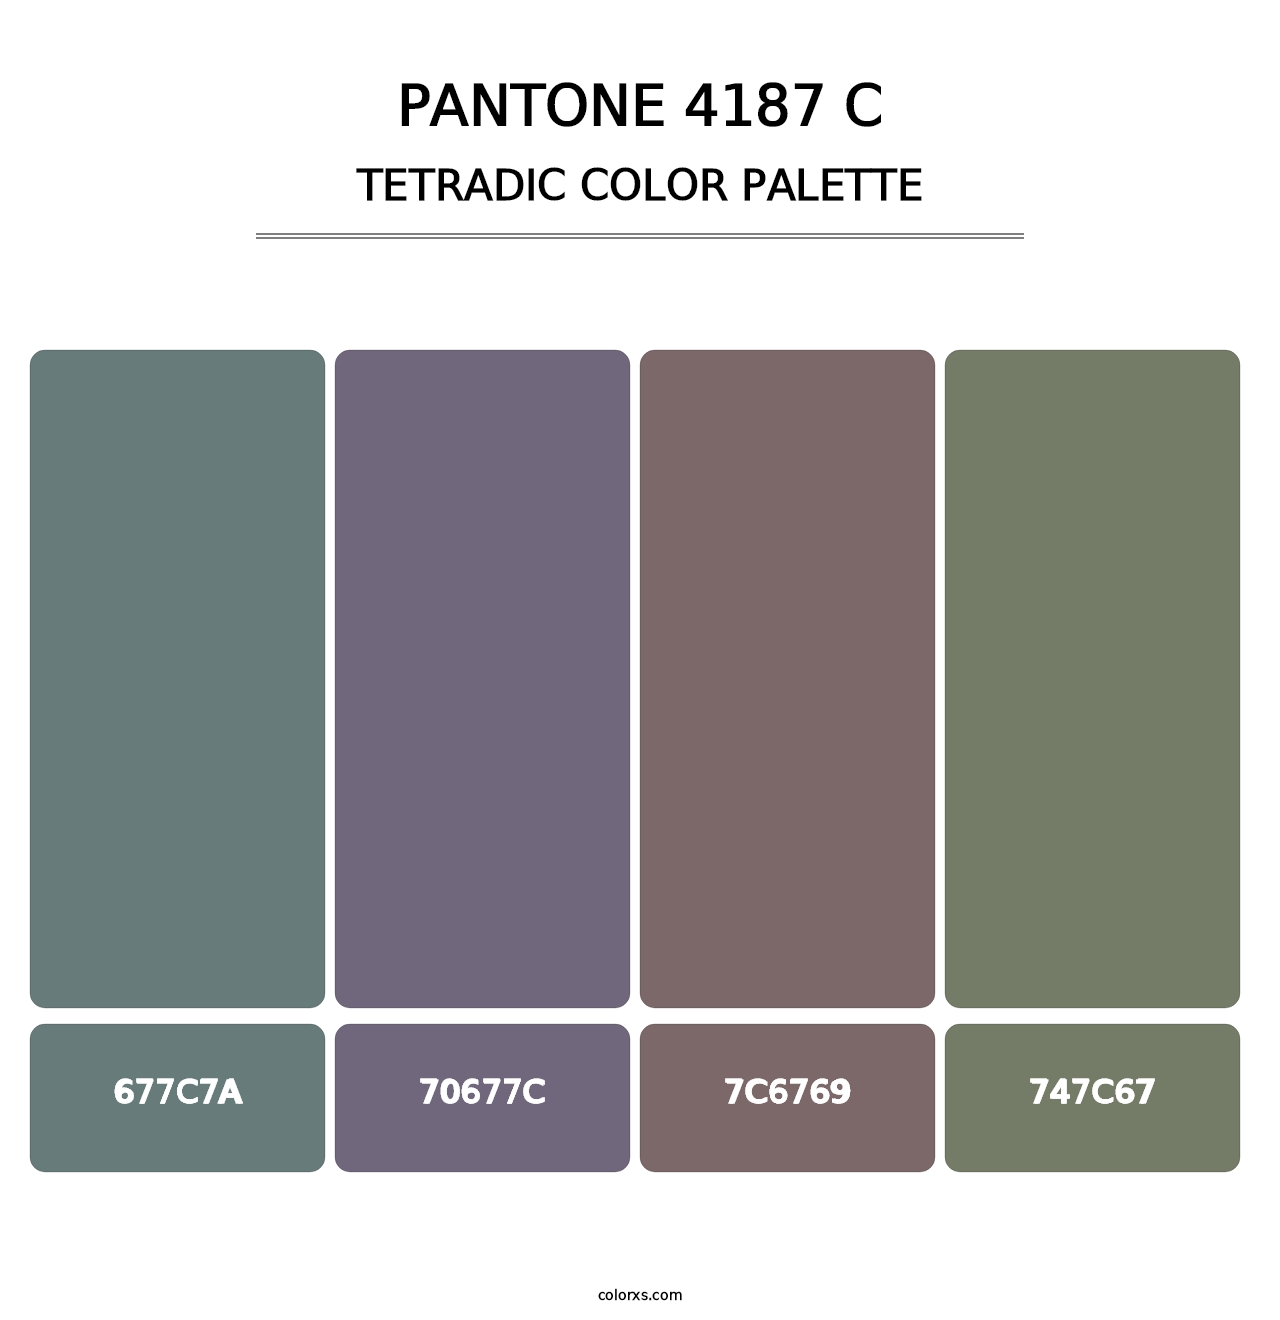 PANTONE 4187 C - Tetradic Color Palette